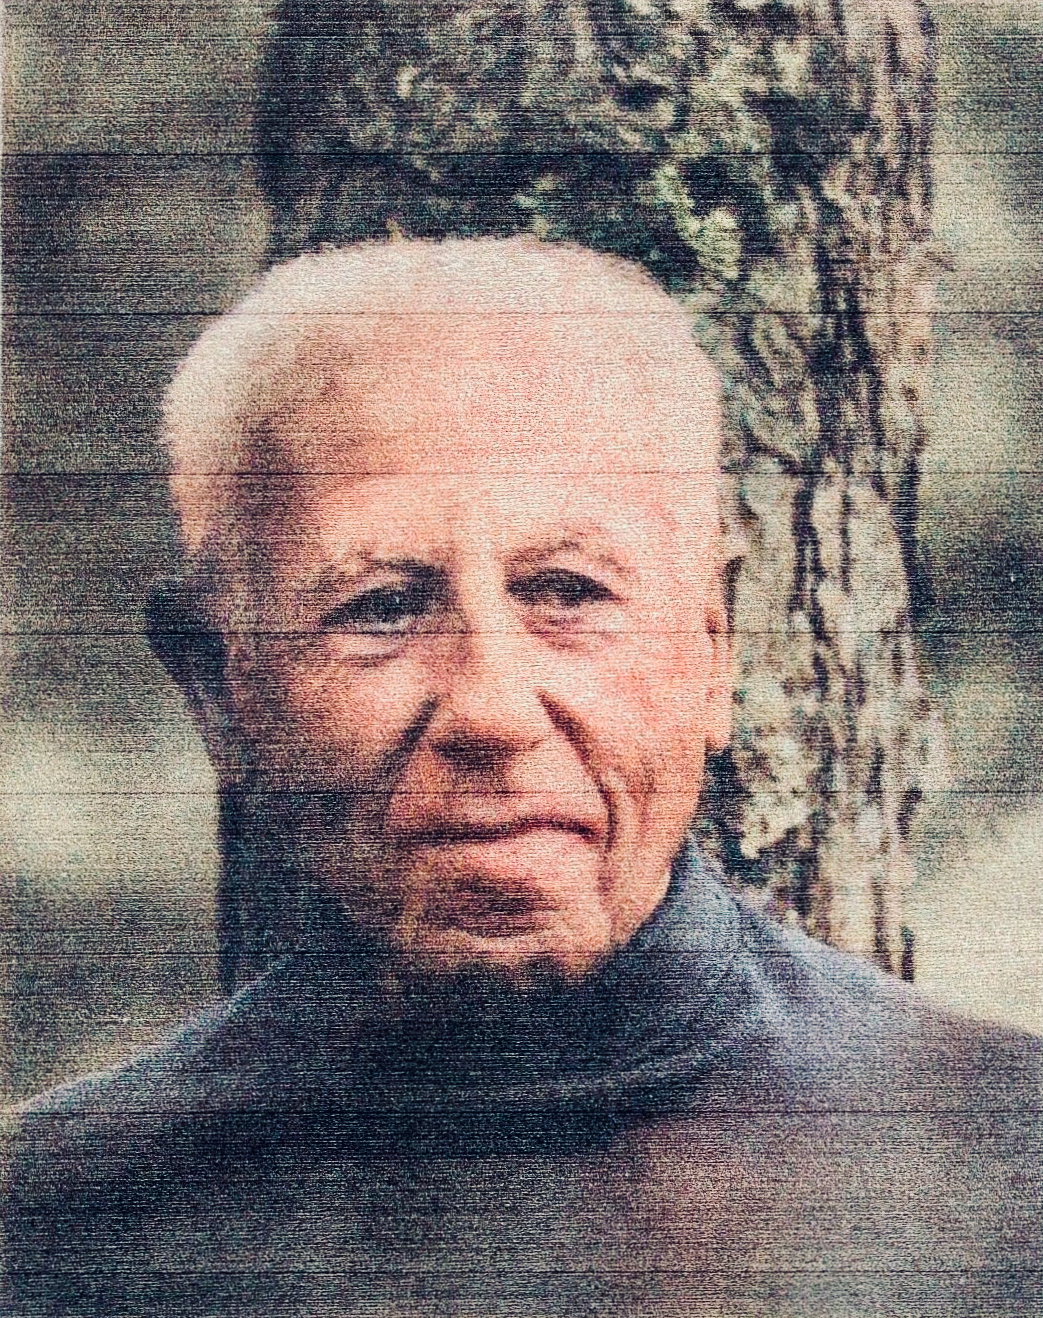 Carlo Suarès